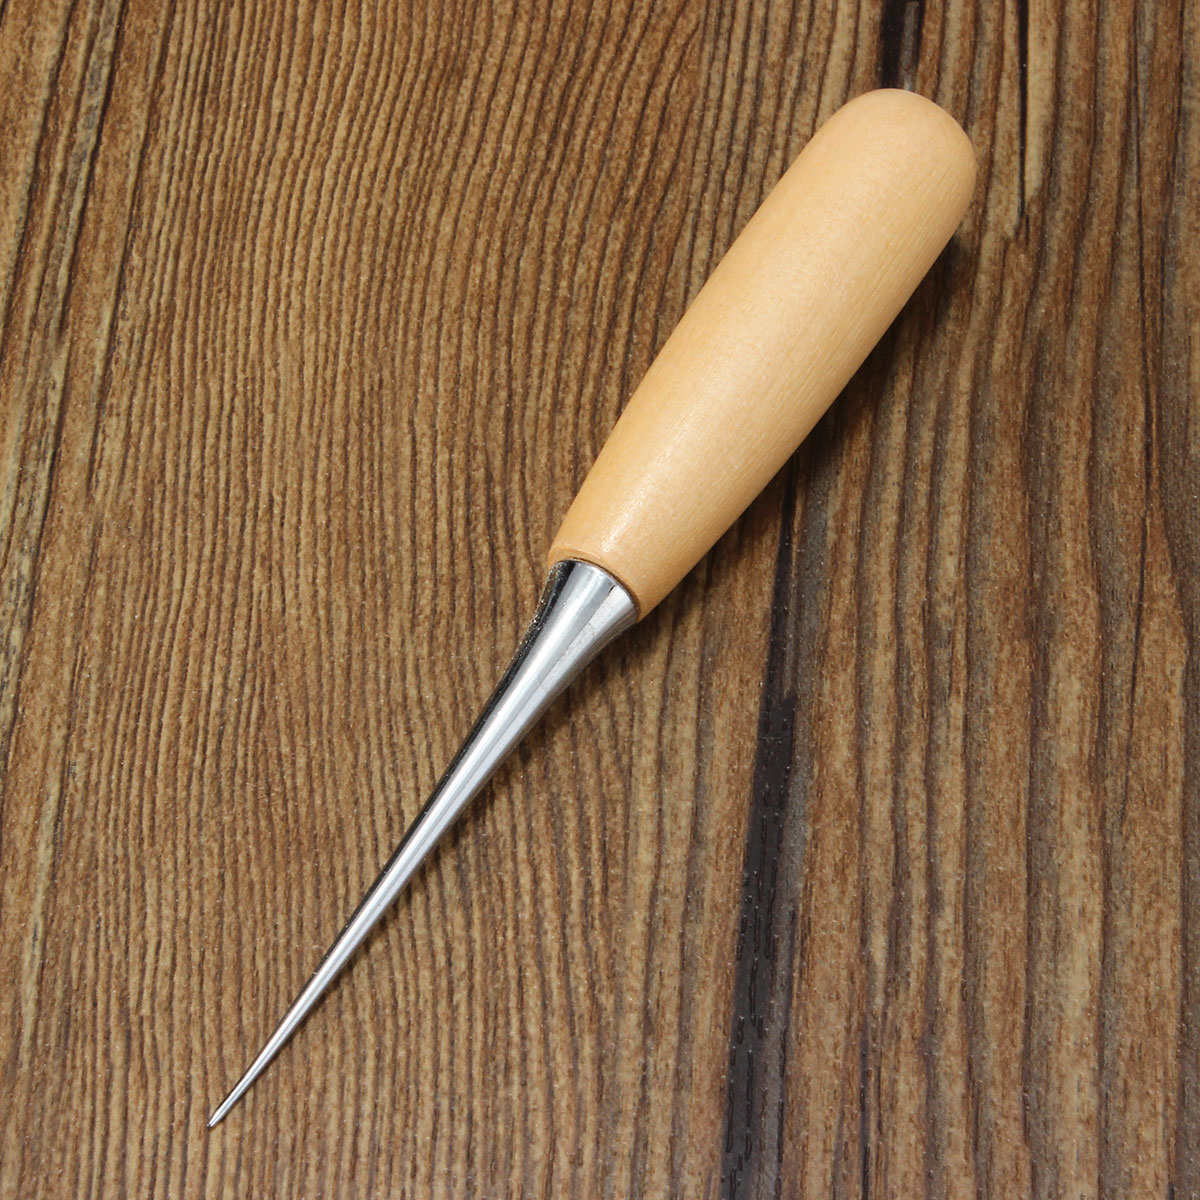 Leather-Craft-Hand-Awl-Punch-Wood-Stick-Tool-Polishing-DIY-Tool-1090360-3